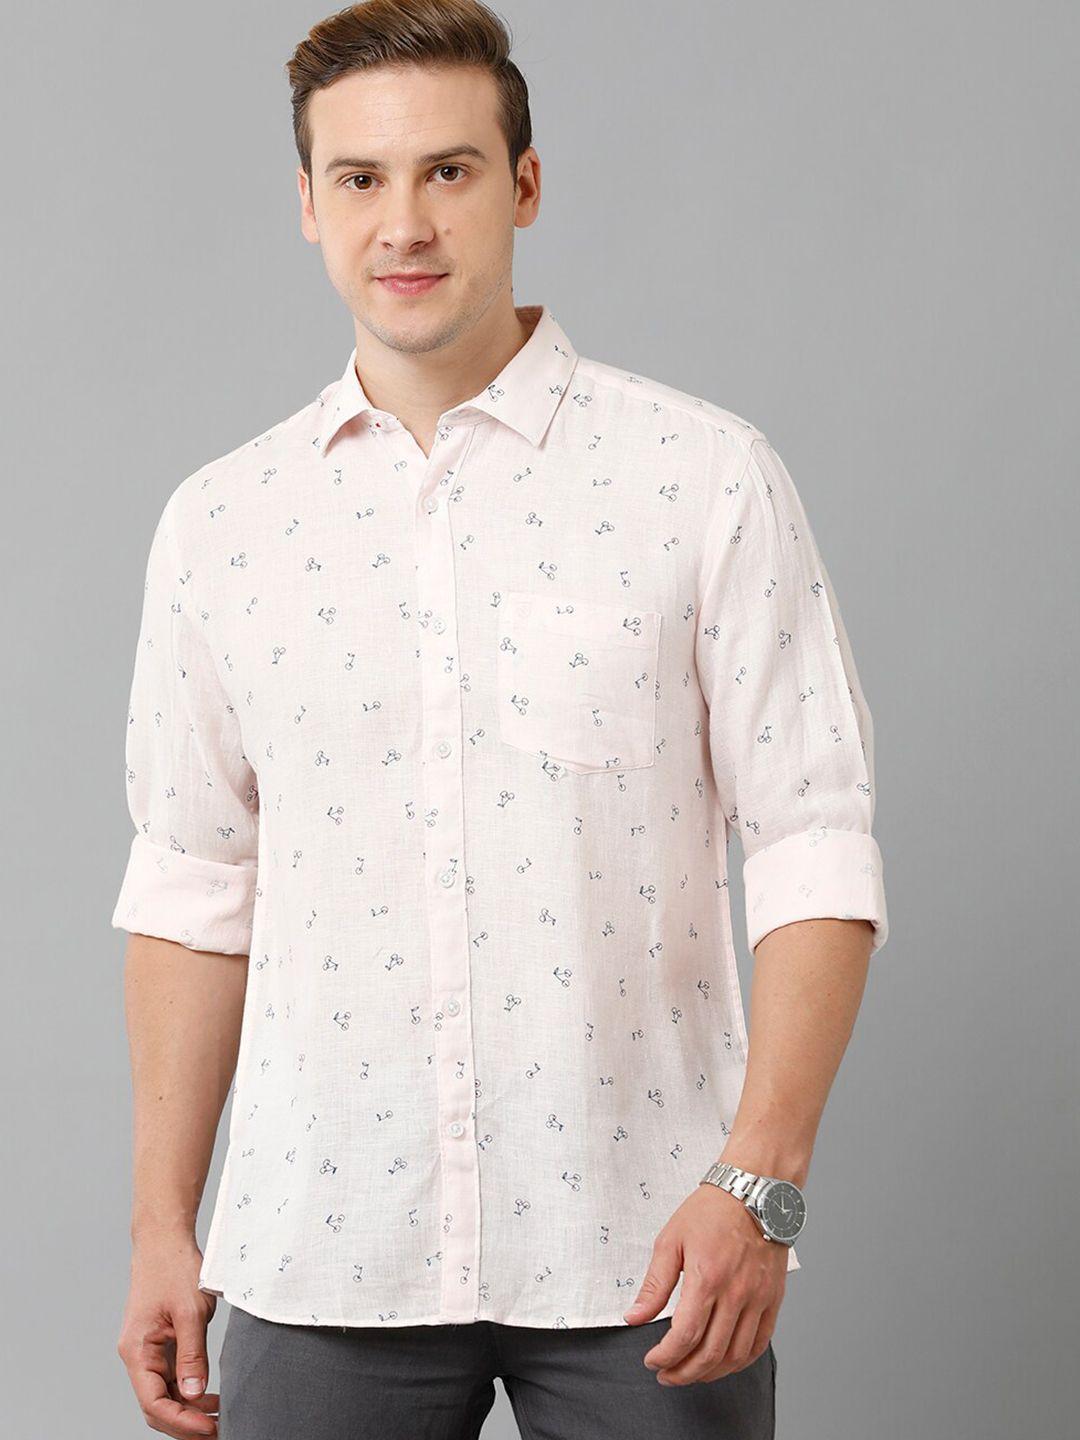 linen club conversational printed spread collar pure linen casual shirt